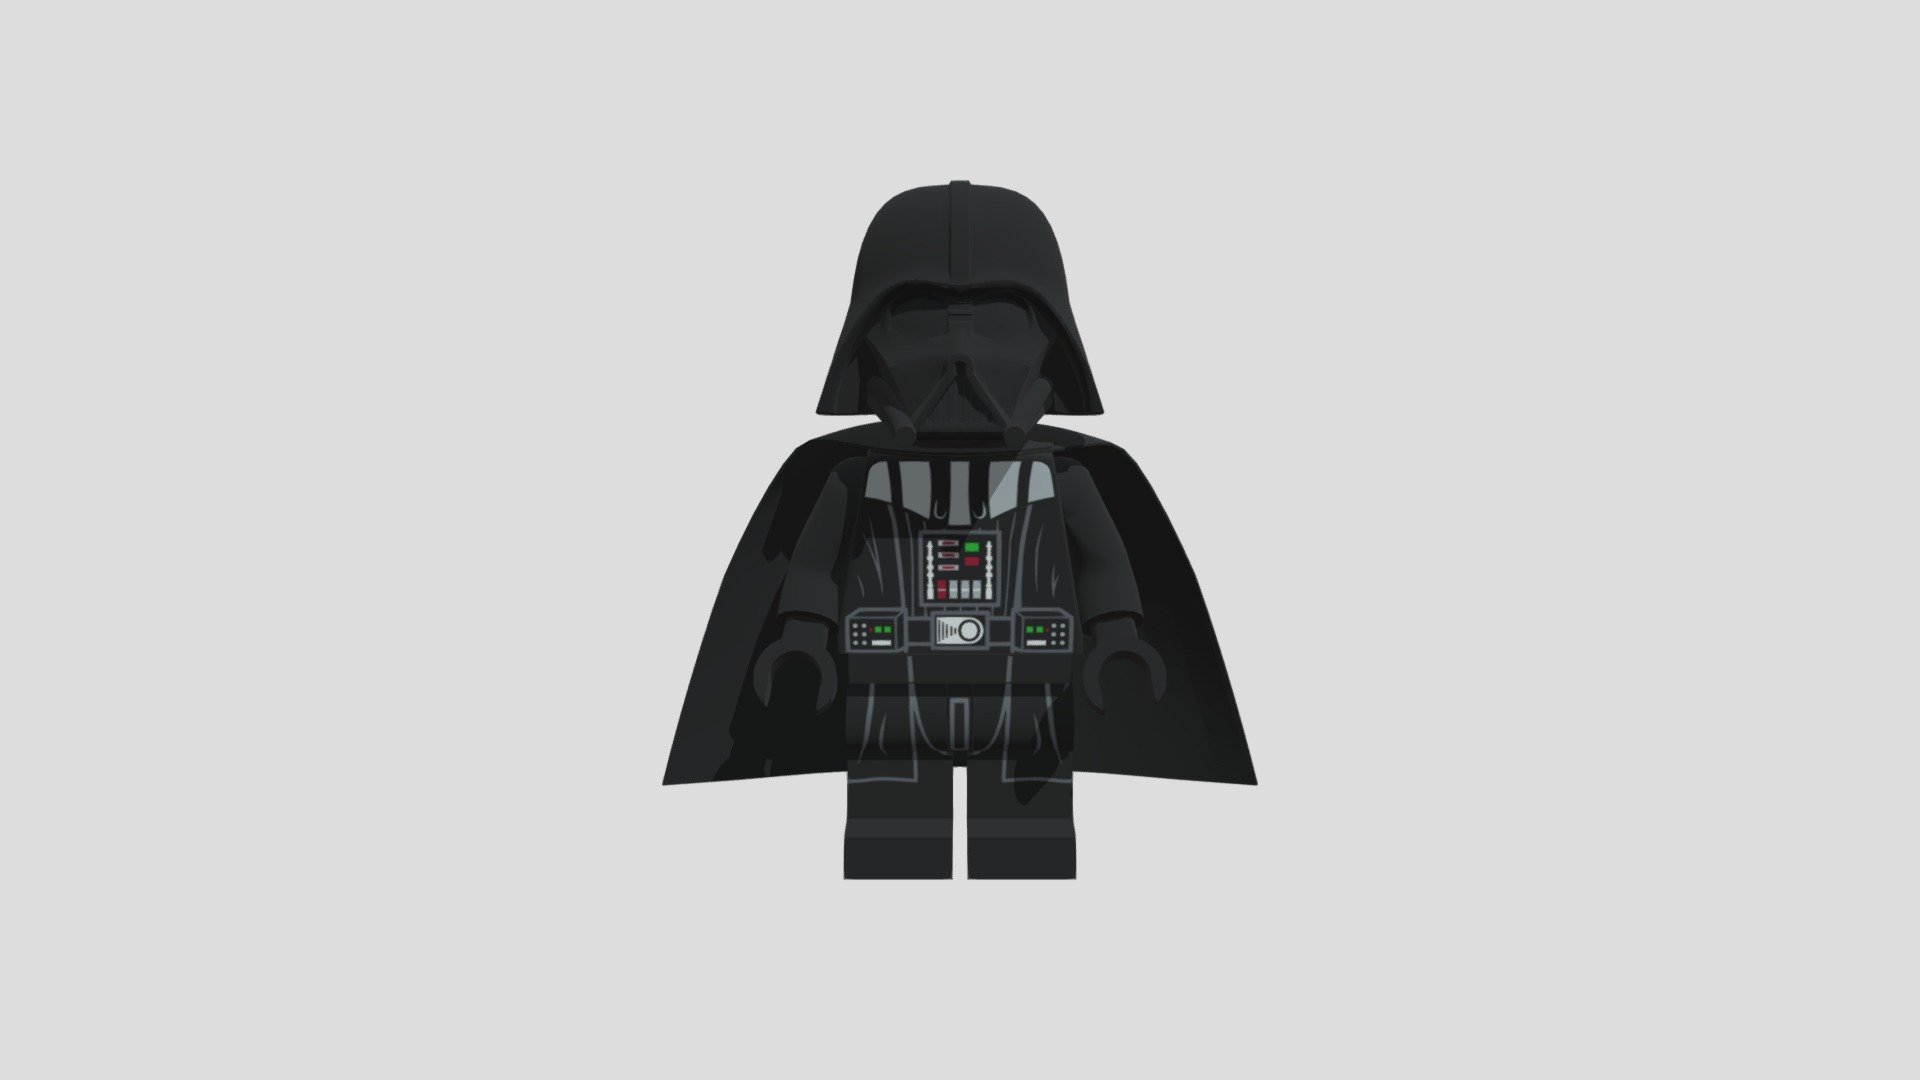 www.sketchfab.com/NibblesRules - Lego Darth Vader Minifigure - Download Free 3D model by Neut2000 3d model